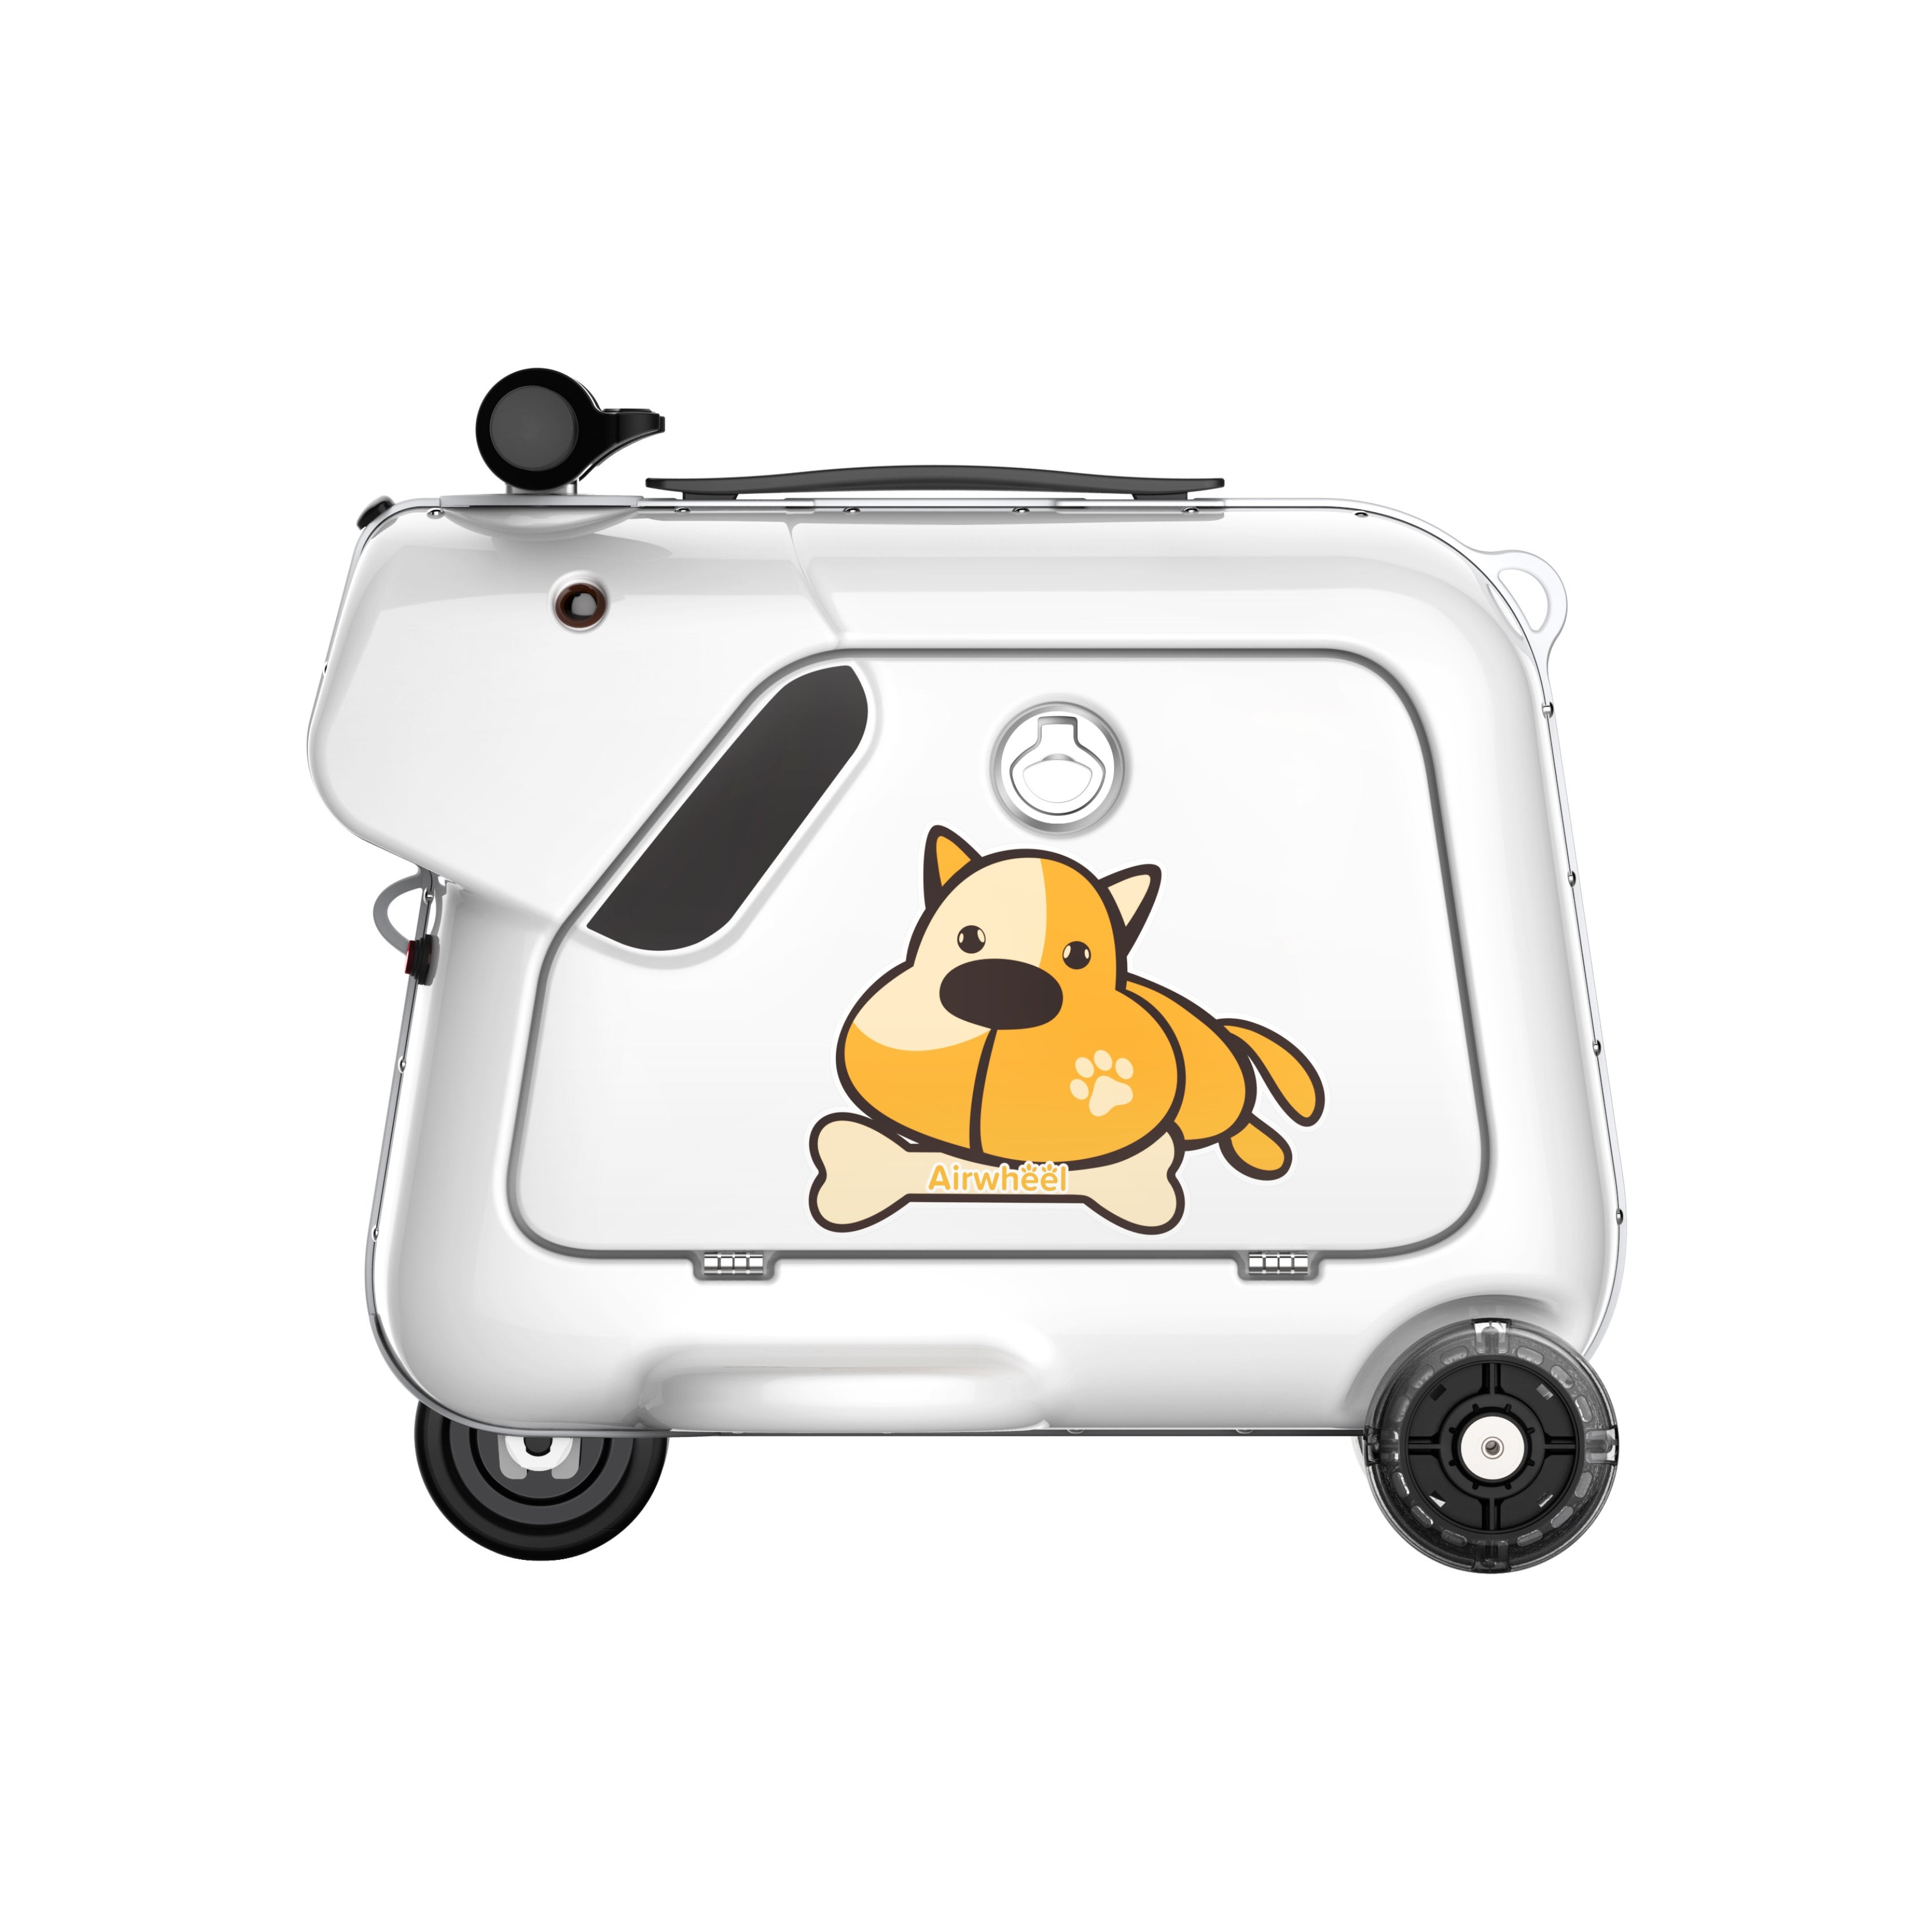 Airwheel SQ3 Children's Smart Rideable Suitcase